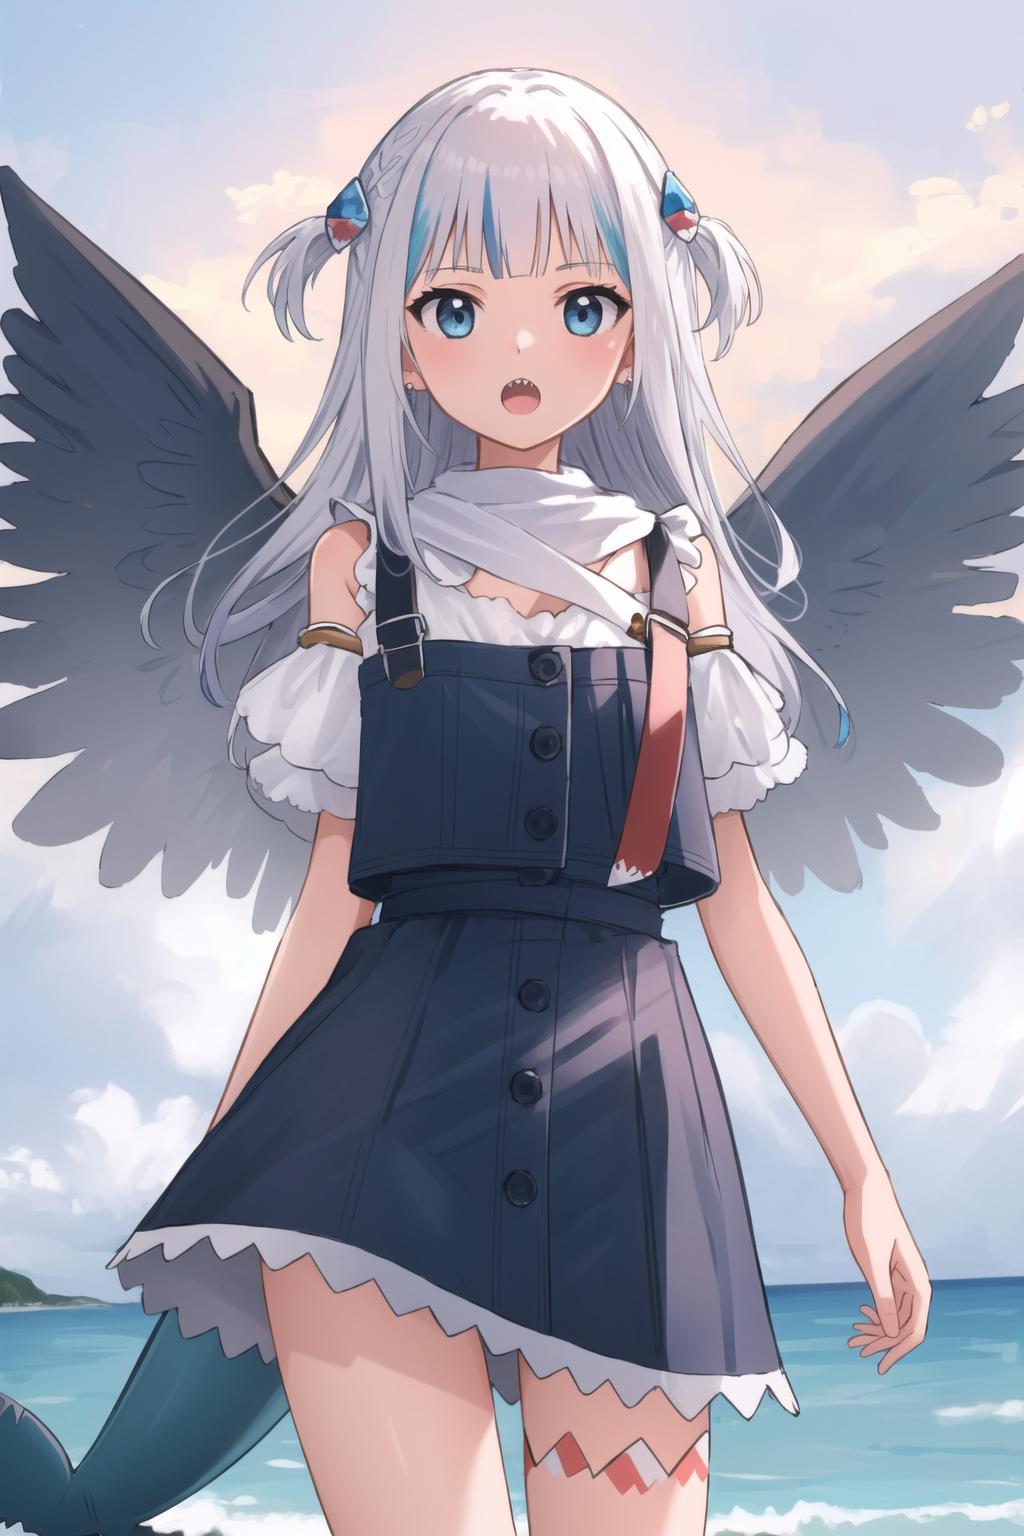 Change-A-Character: Angel-ify Your Waifu Today! image by PettankoPaizuri